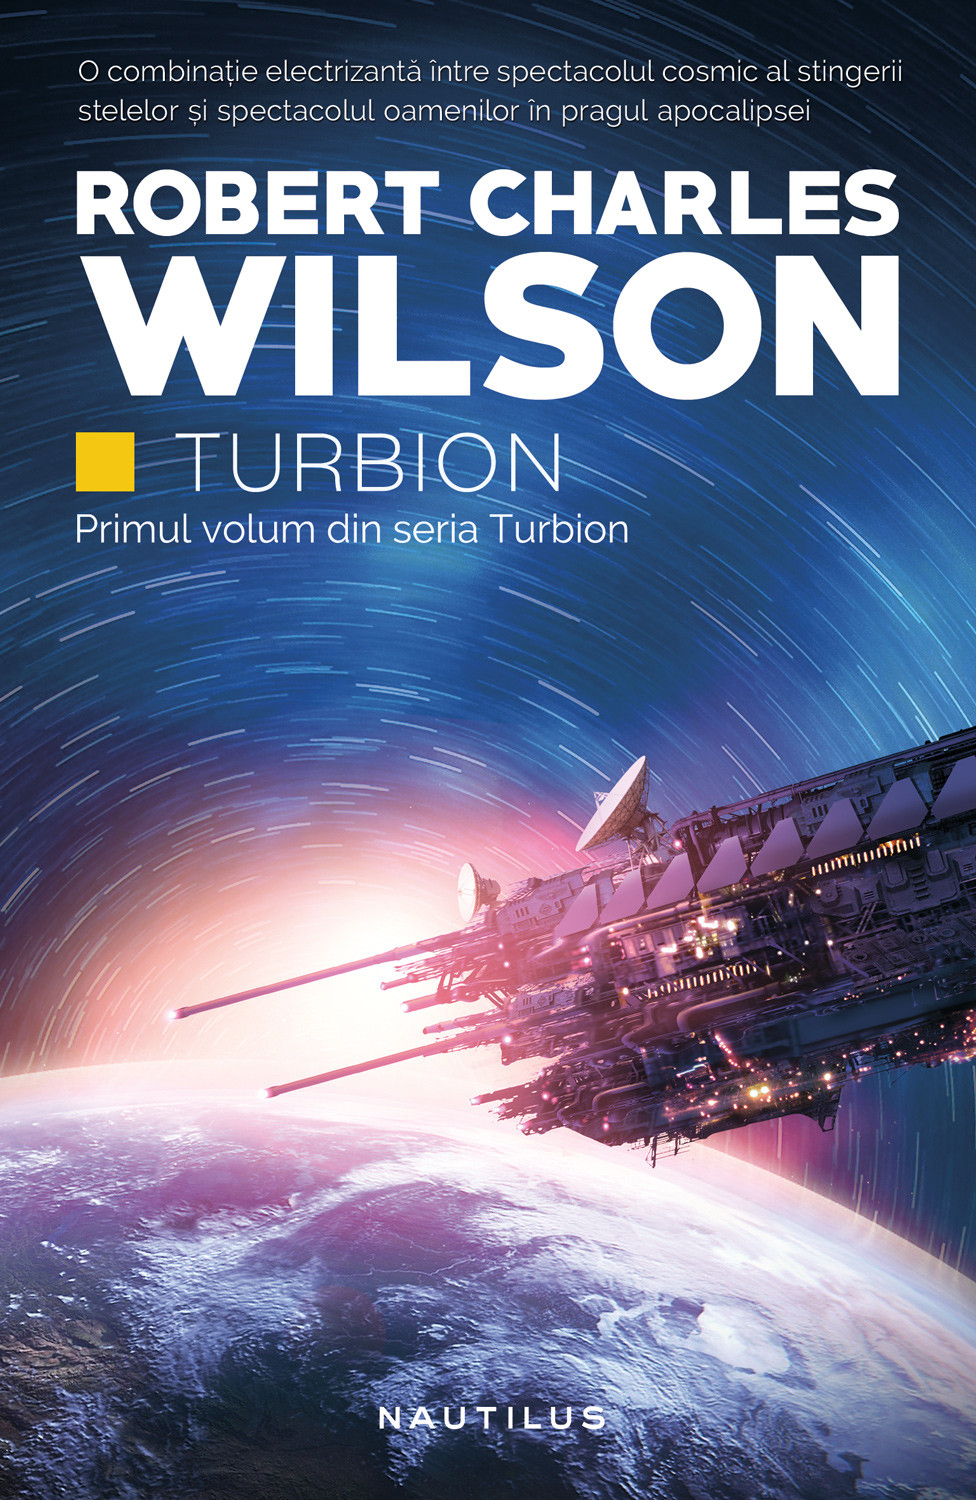 Turbion | Robert Charles Wilson carturesti.ro poza bestsellers.ro